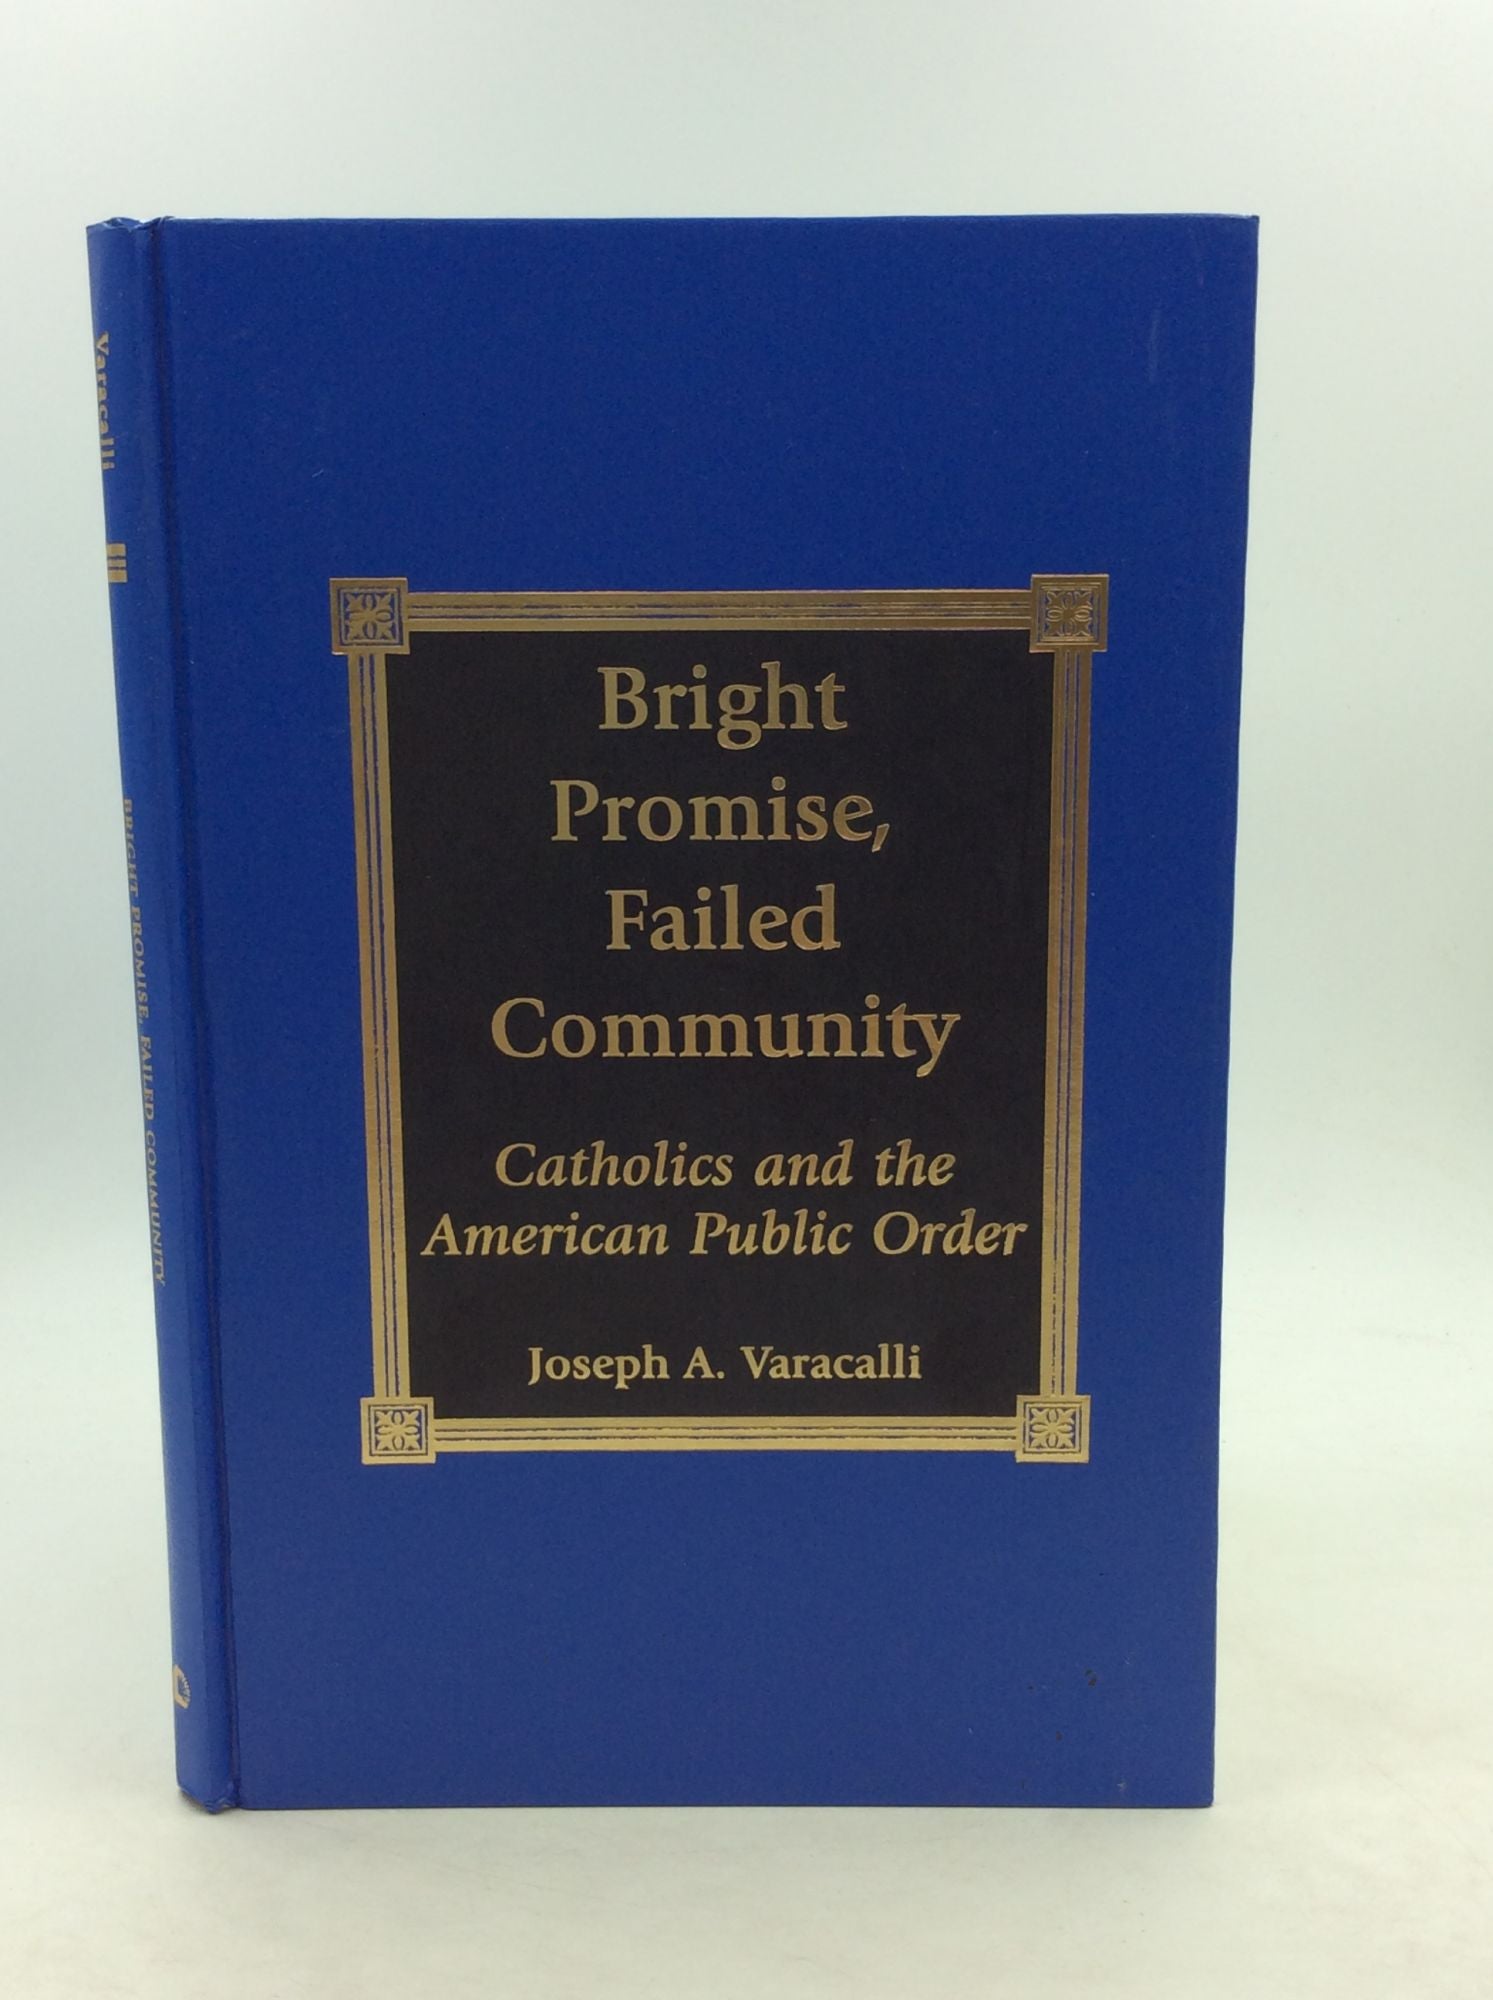 Joseph A. Varacalli - Bright Promise, Failed Community: Catholics and the American Public Order